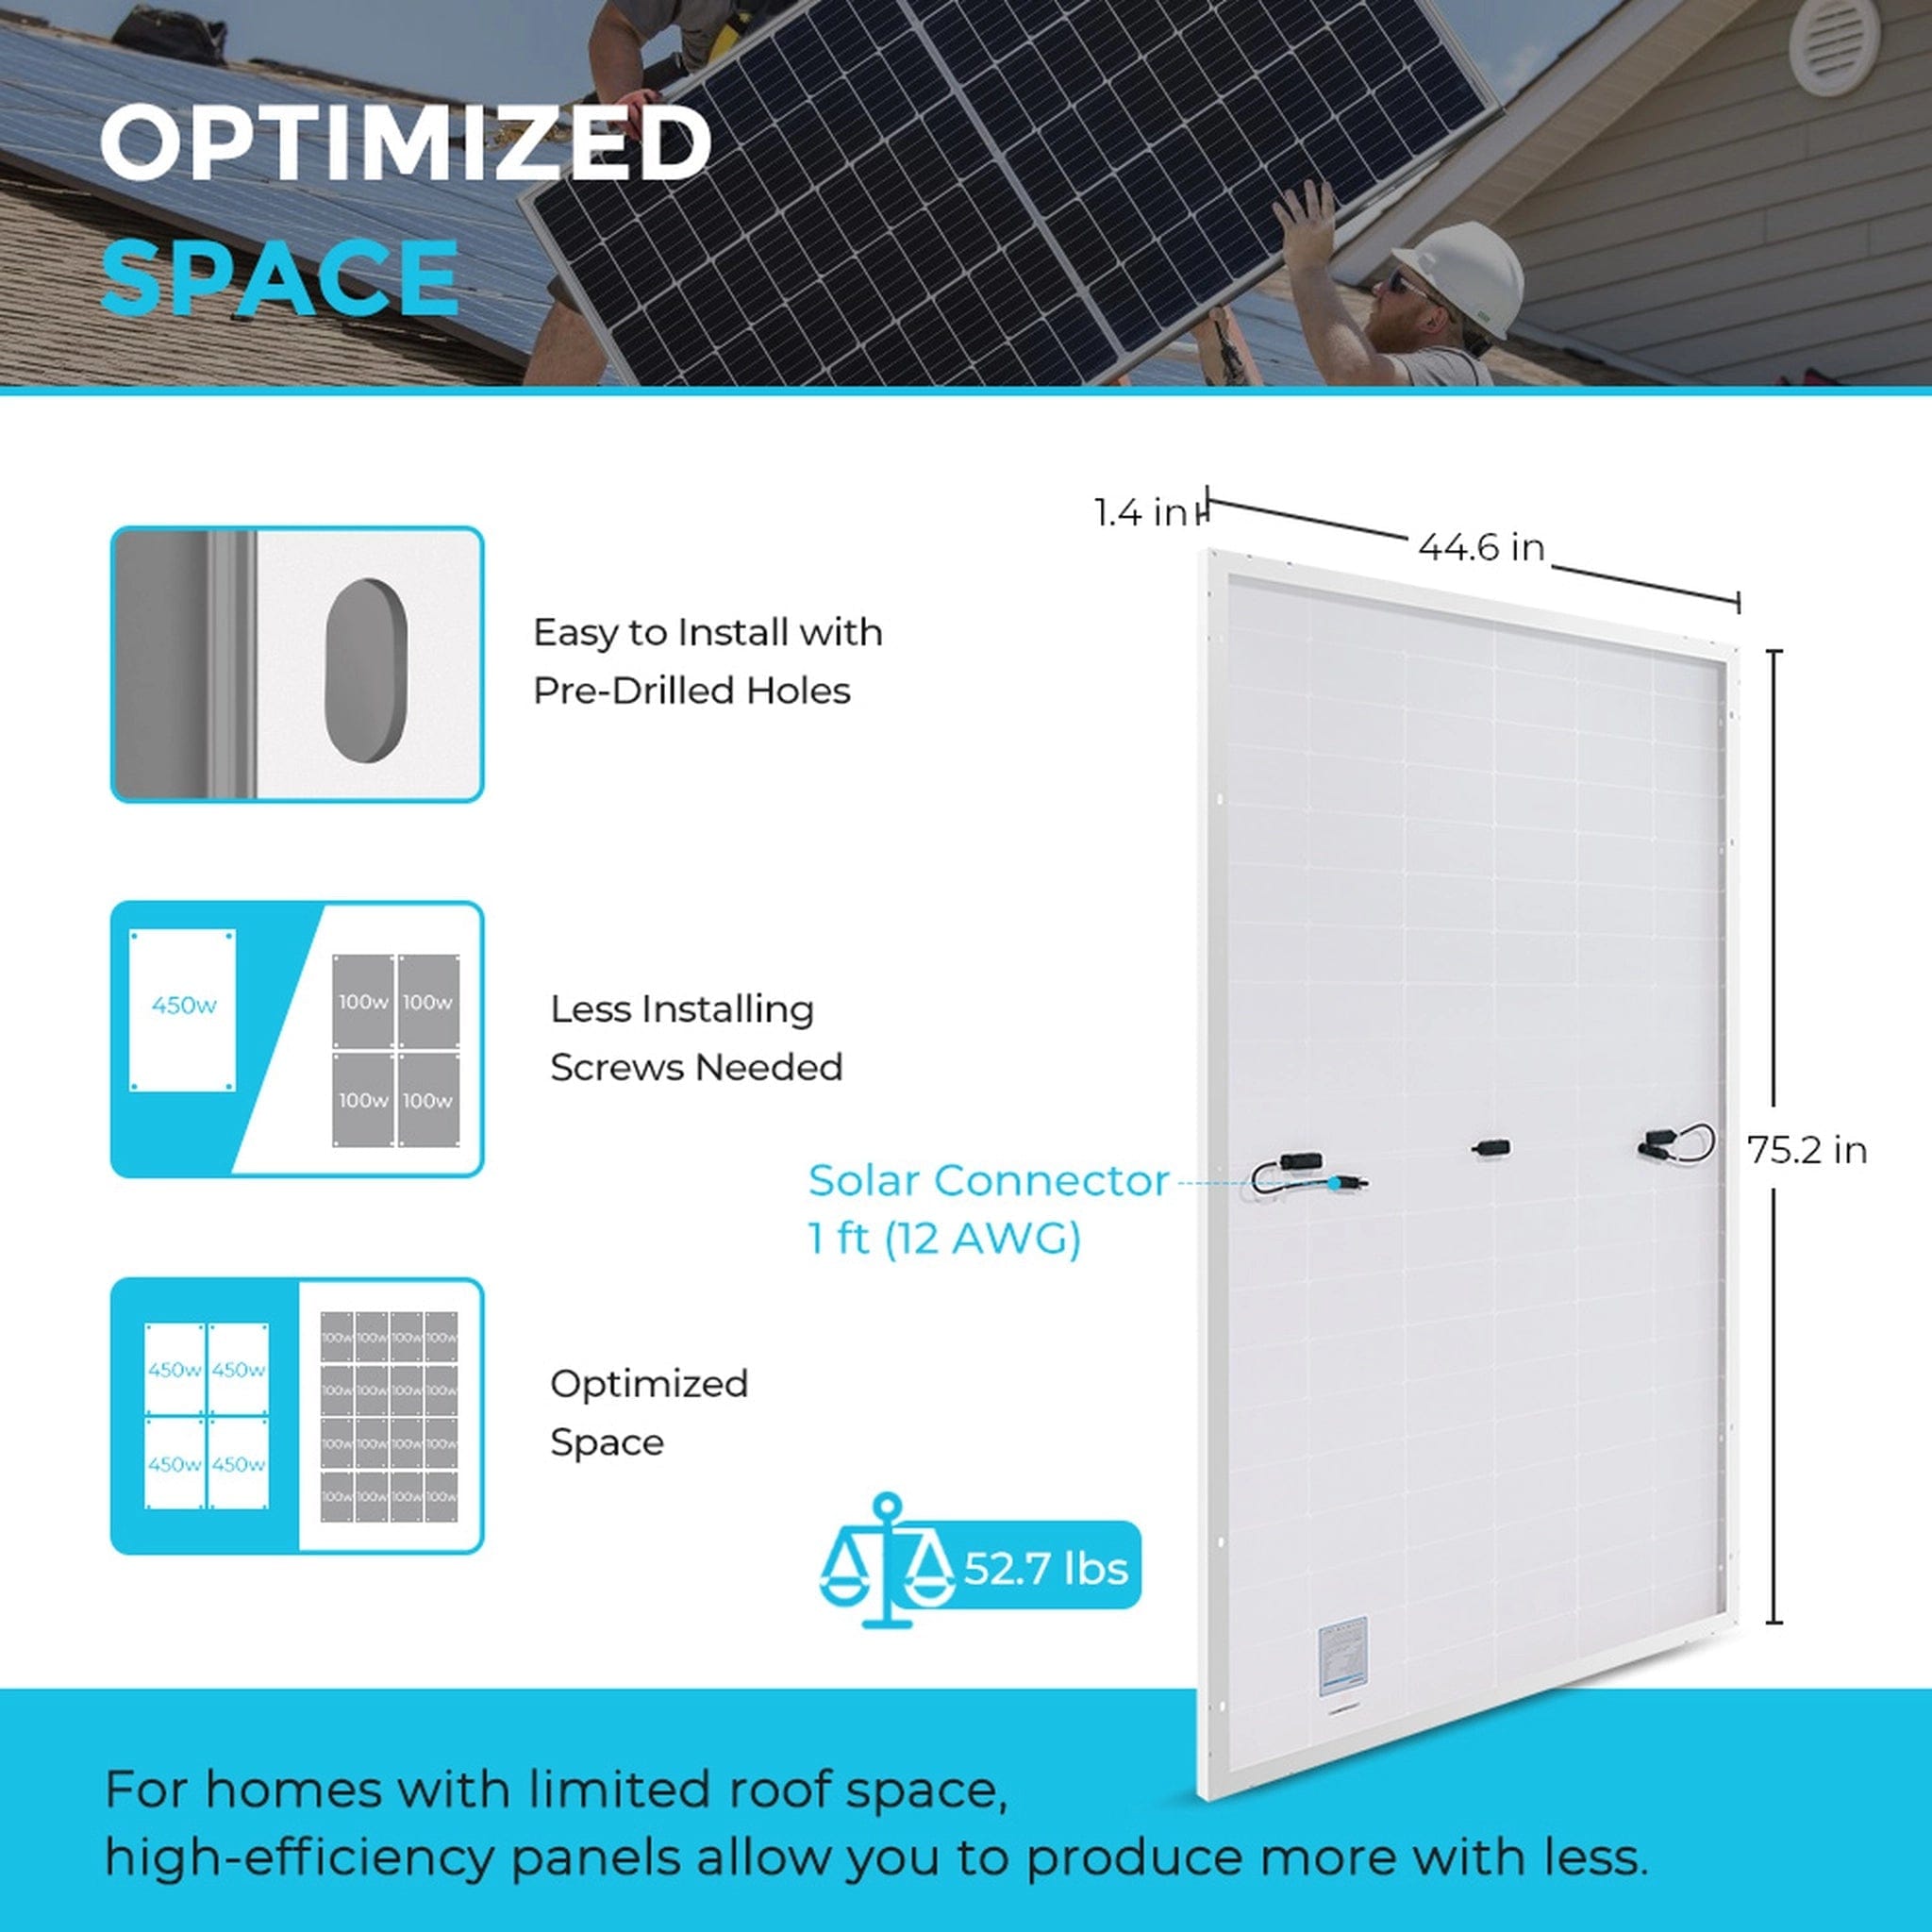 Renogy 2x 450W Monocrystalline Solar Panel Kit